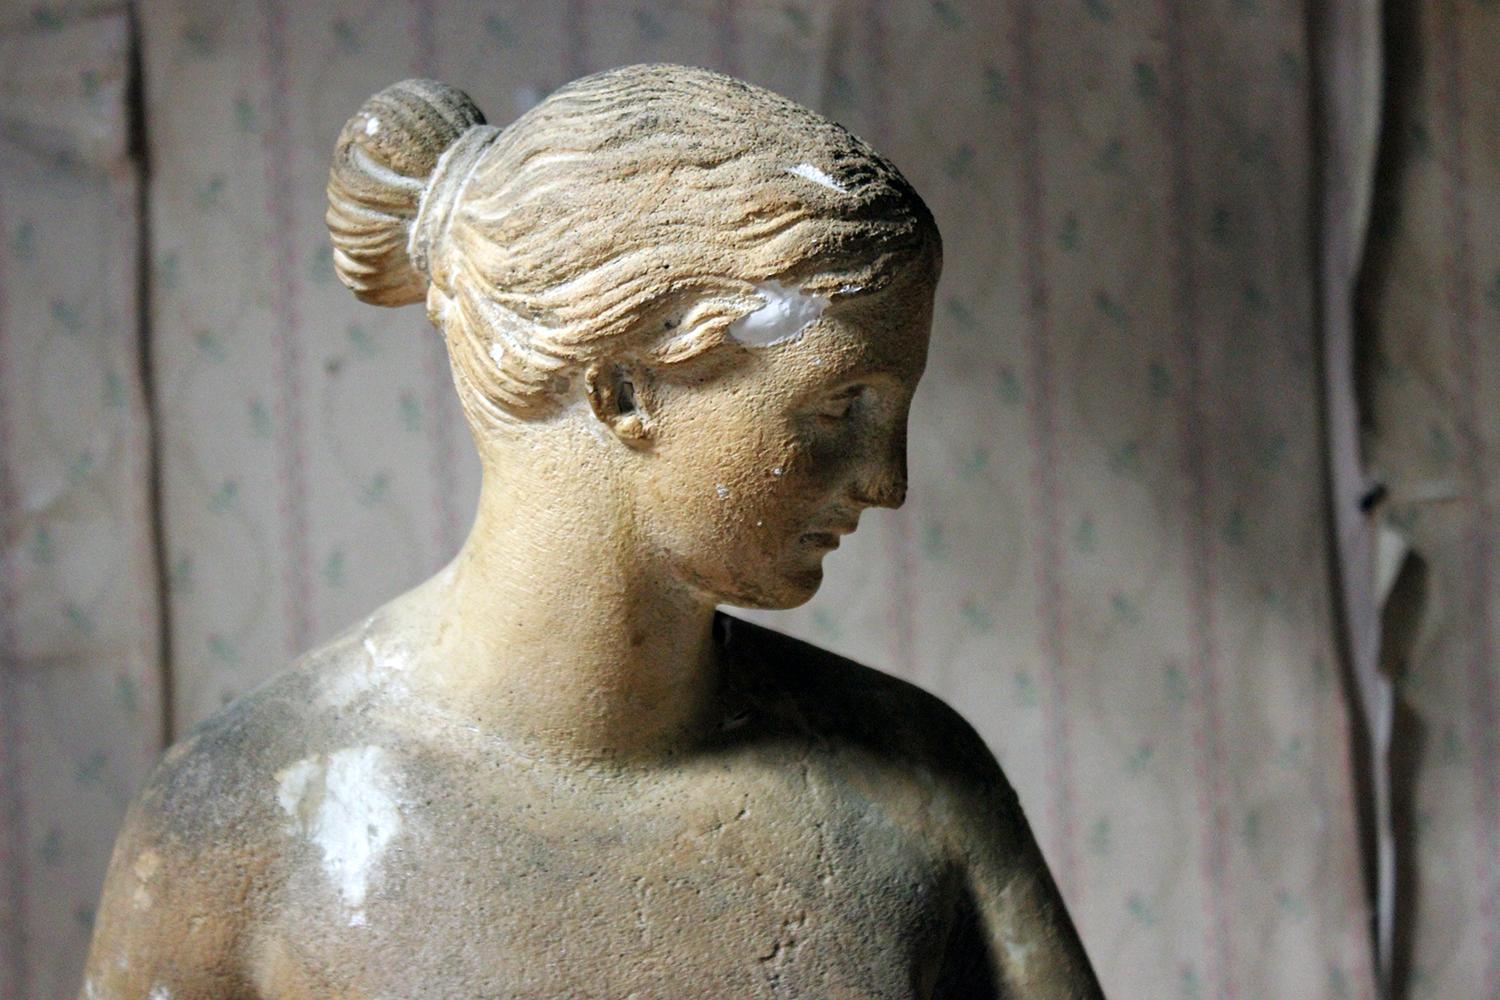 English Mid-19th Century Plaster Figure ‘The Greek Slave’ after Hiram Powers, c.1844-70